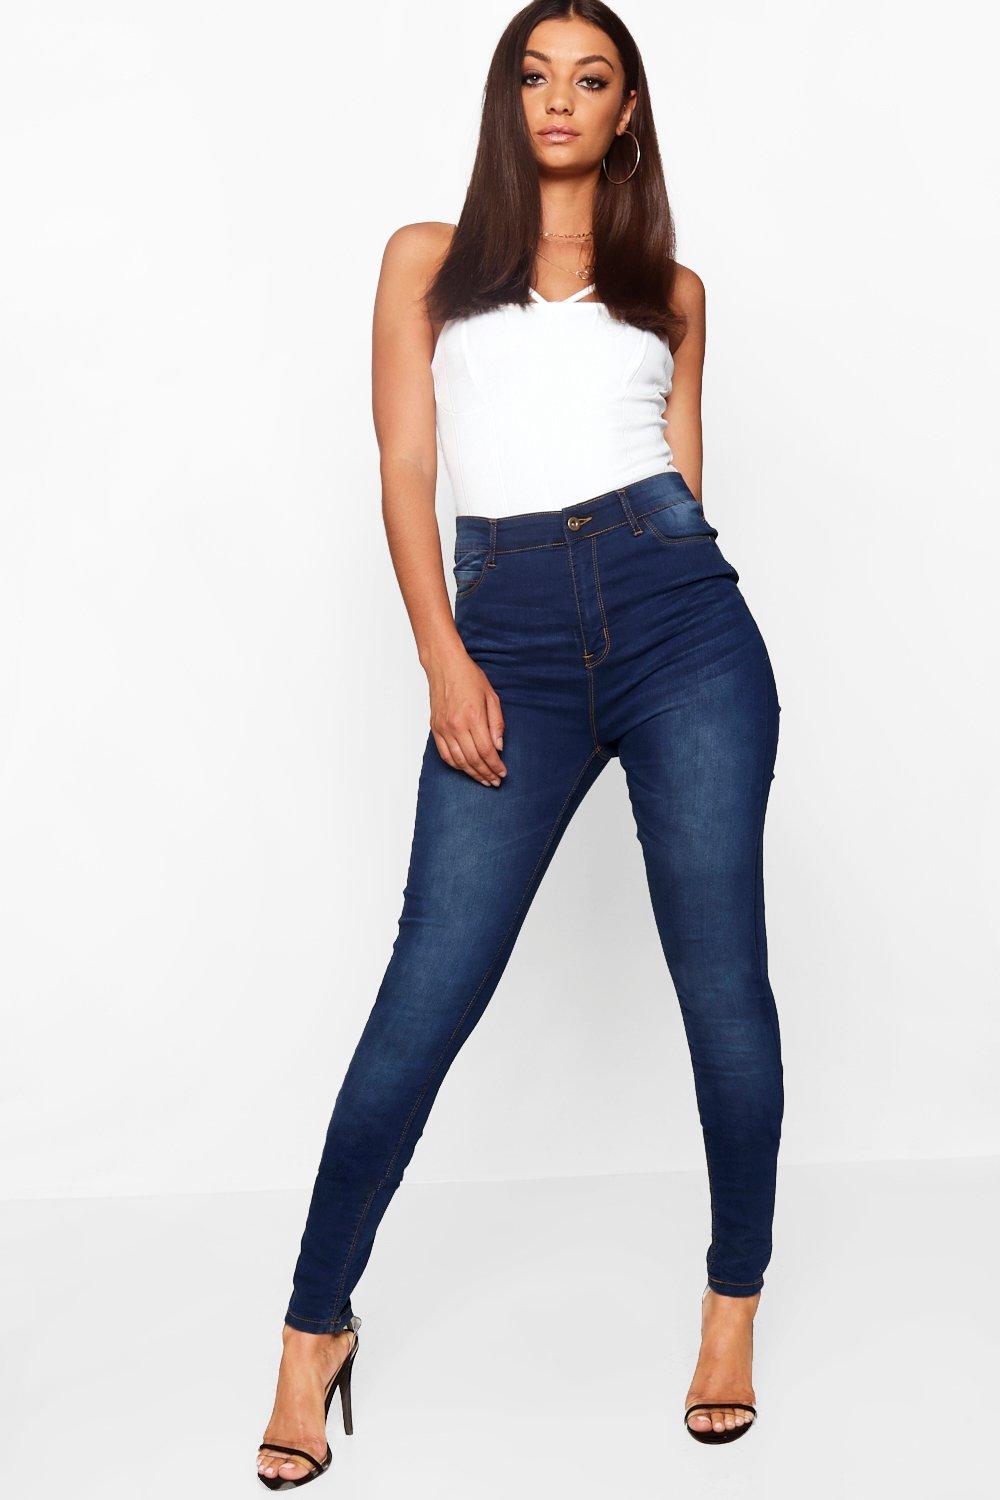 Buy TENSY Women Slim fit &Strechable Jeans (28, Dark.Blue) at